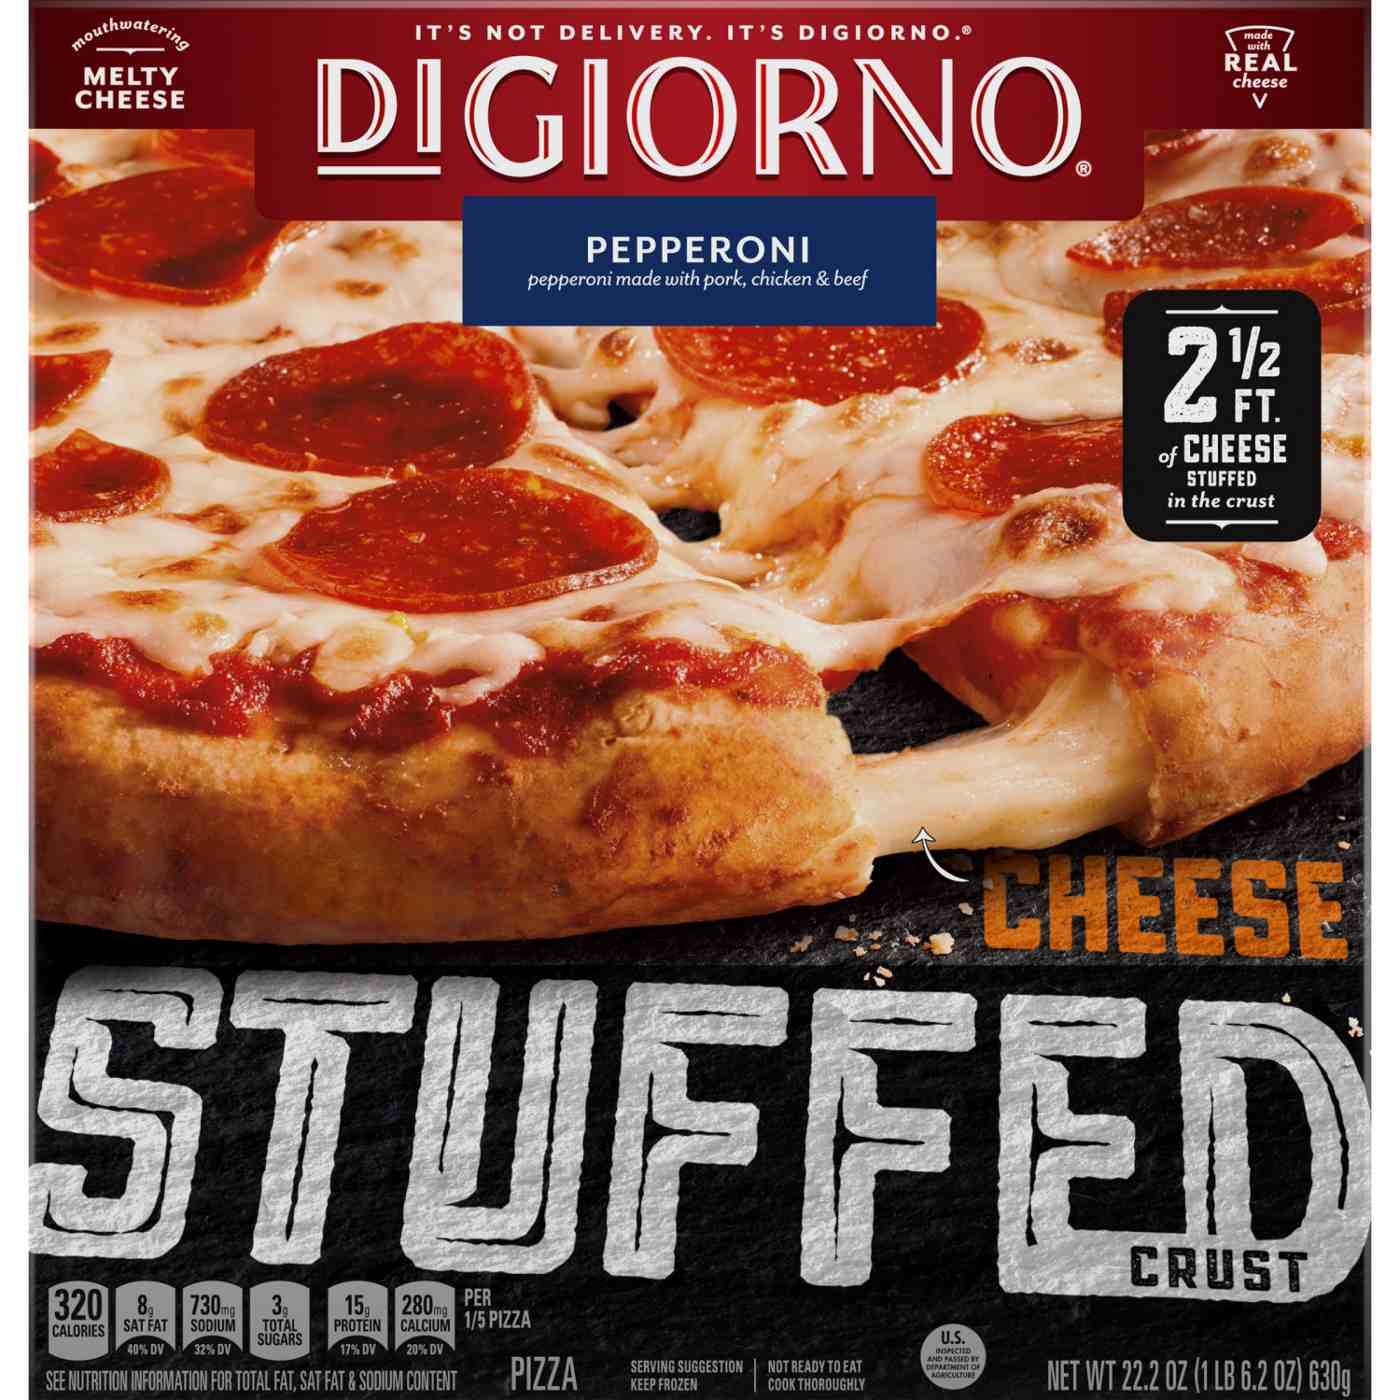 DiGiorno Cheese Stuffed Crust Frozen Pizza - Pepperoni; image 1 of 7